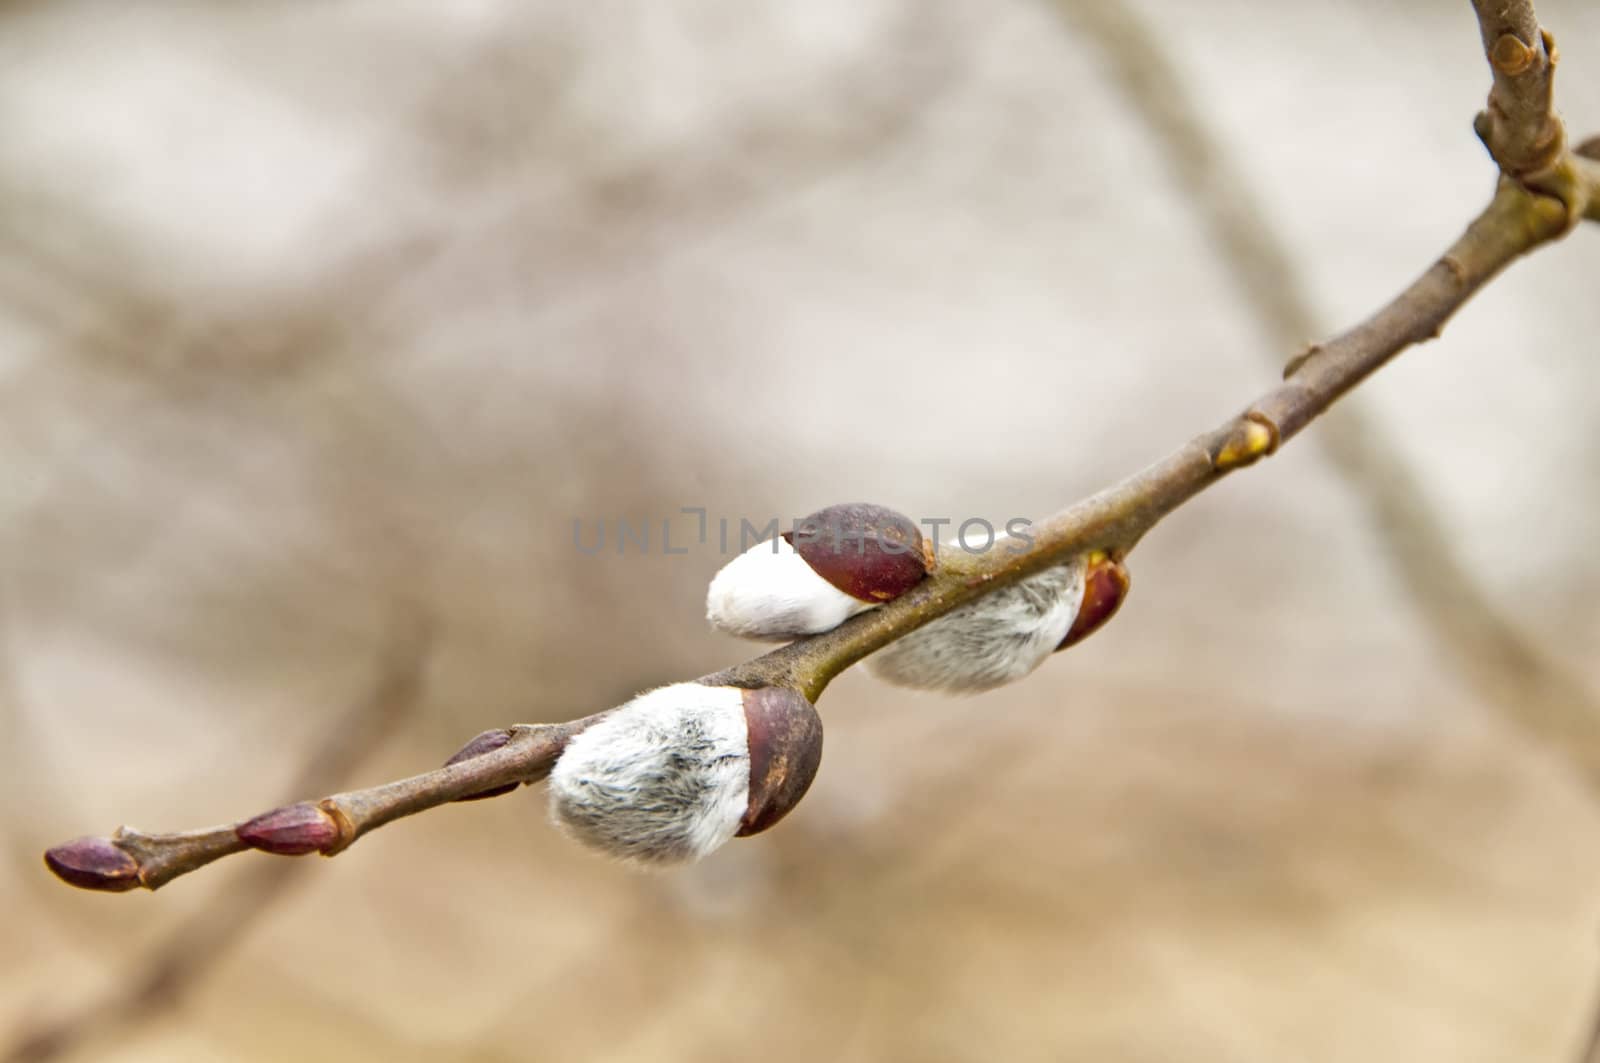 willow blossom by Jochen